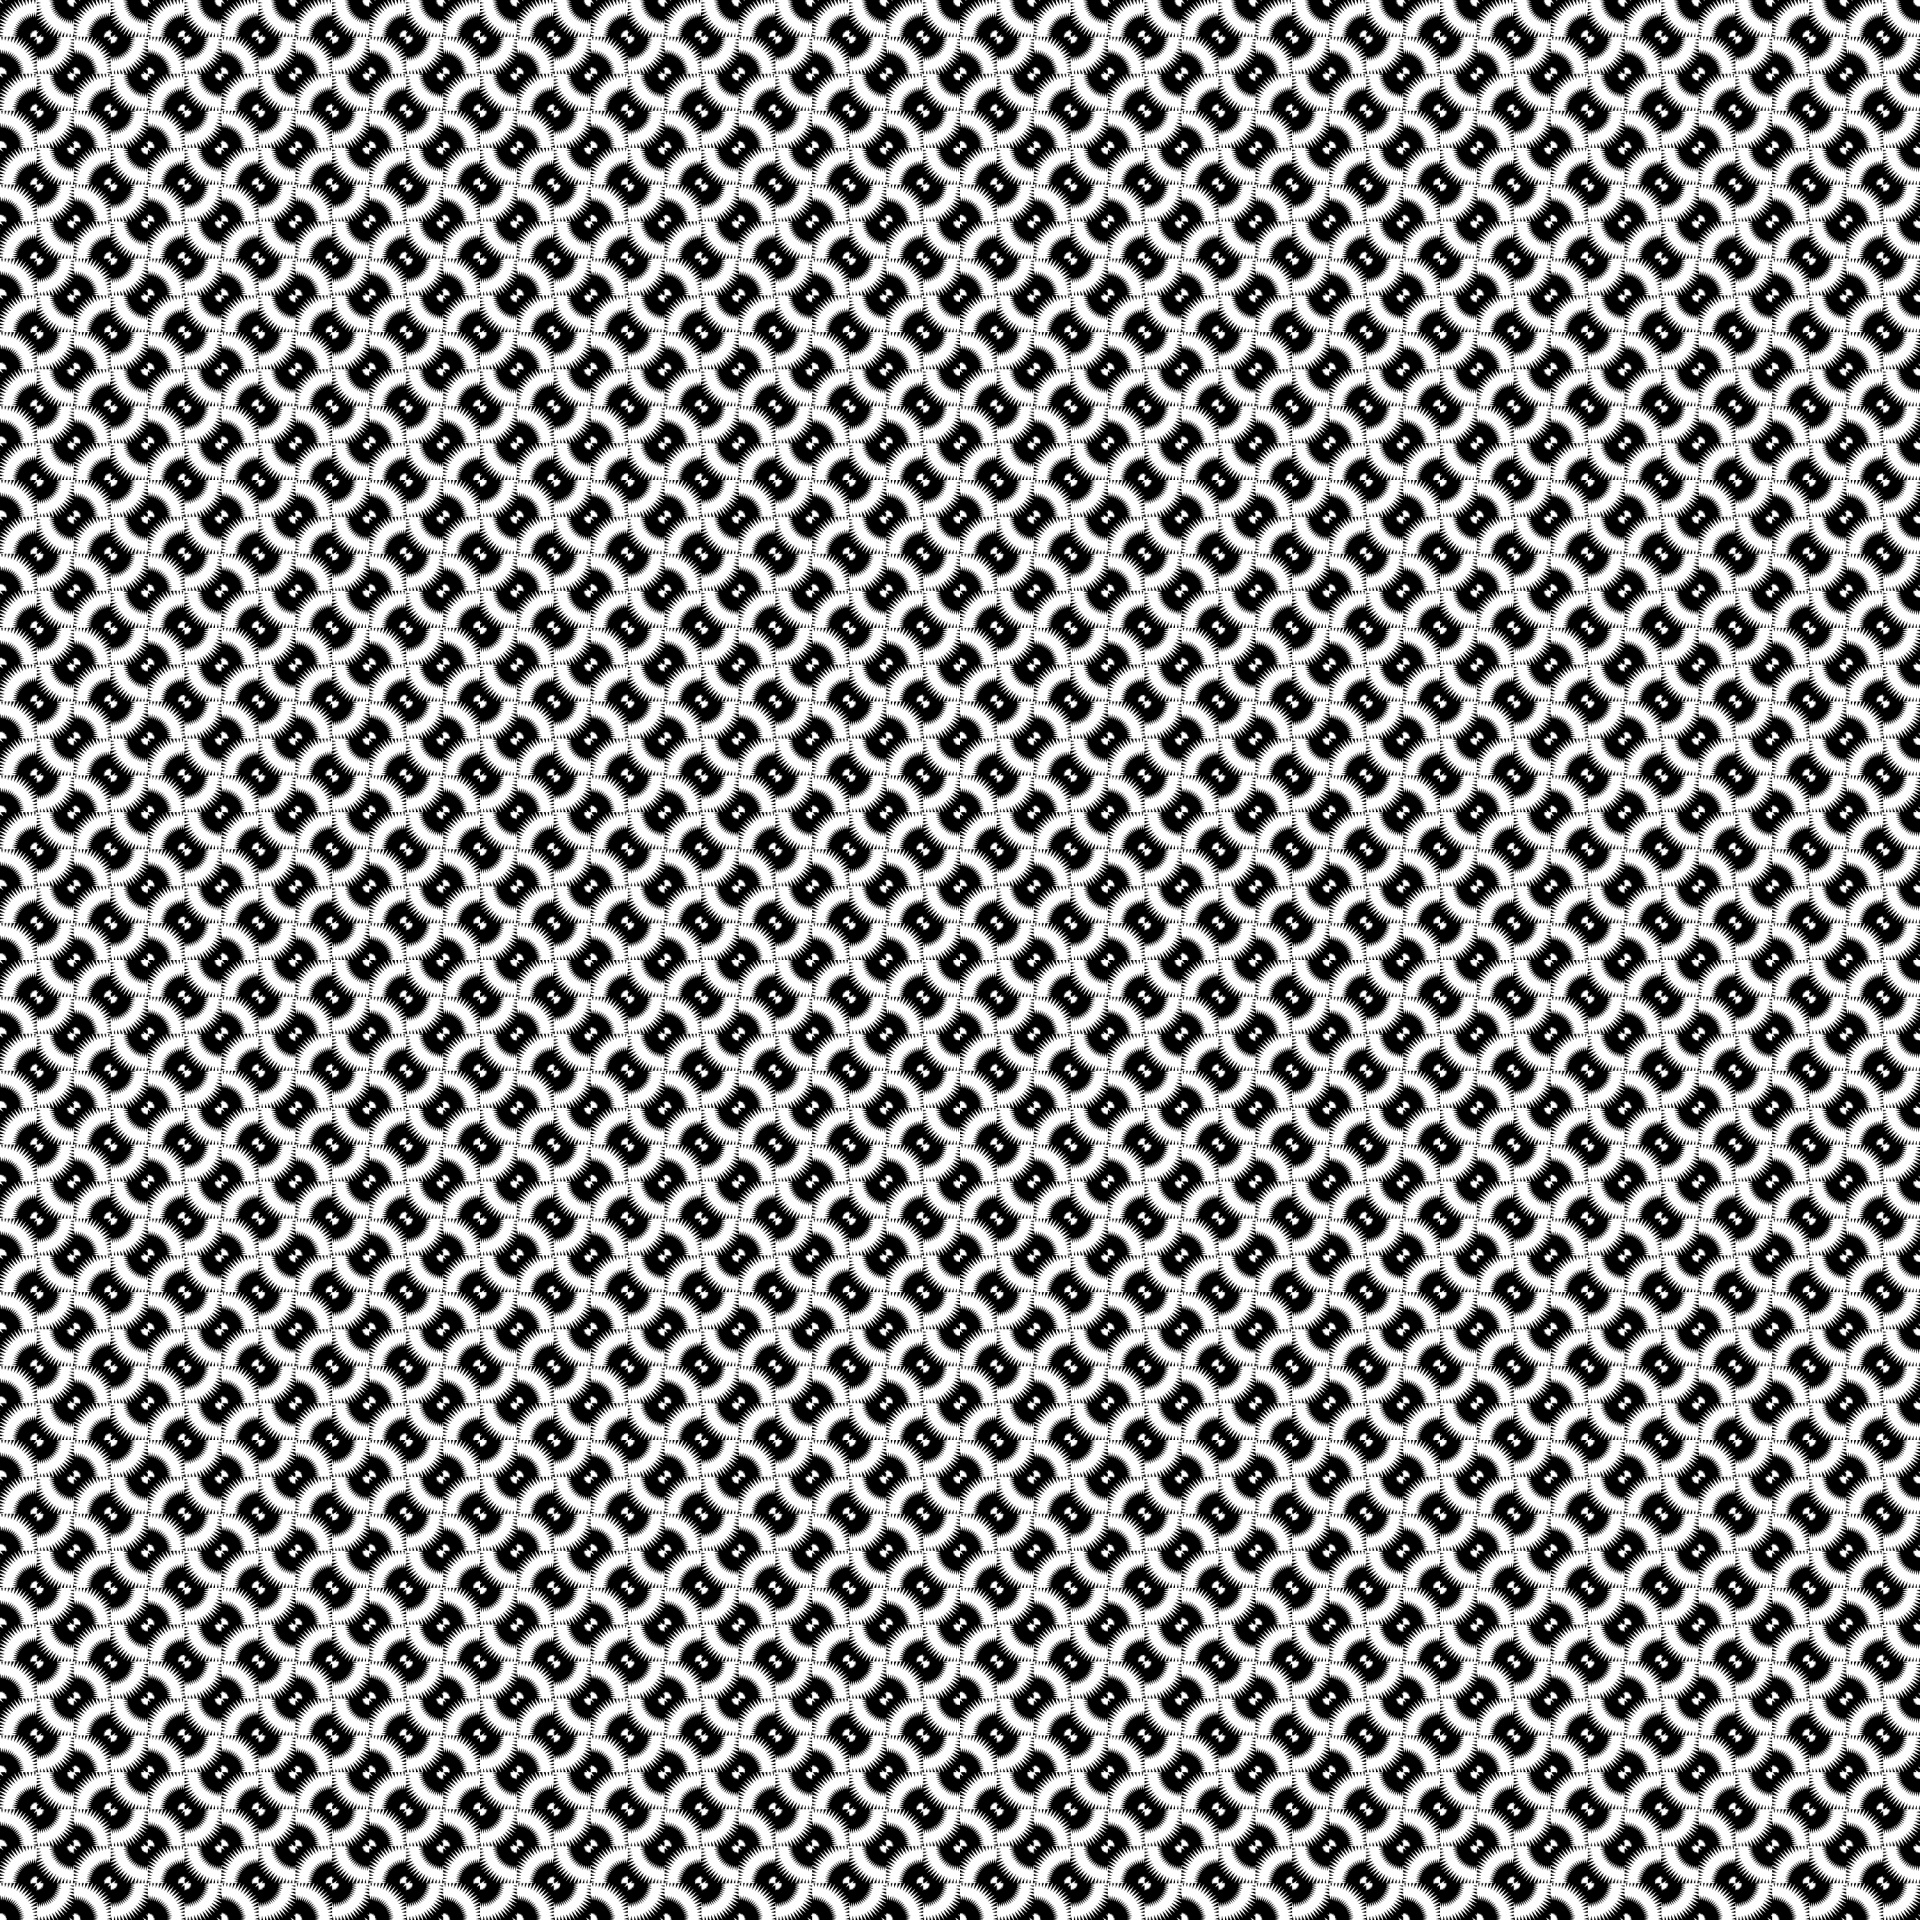 Black And White Design Background - 3 Free Stock Photo - Public Domain